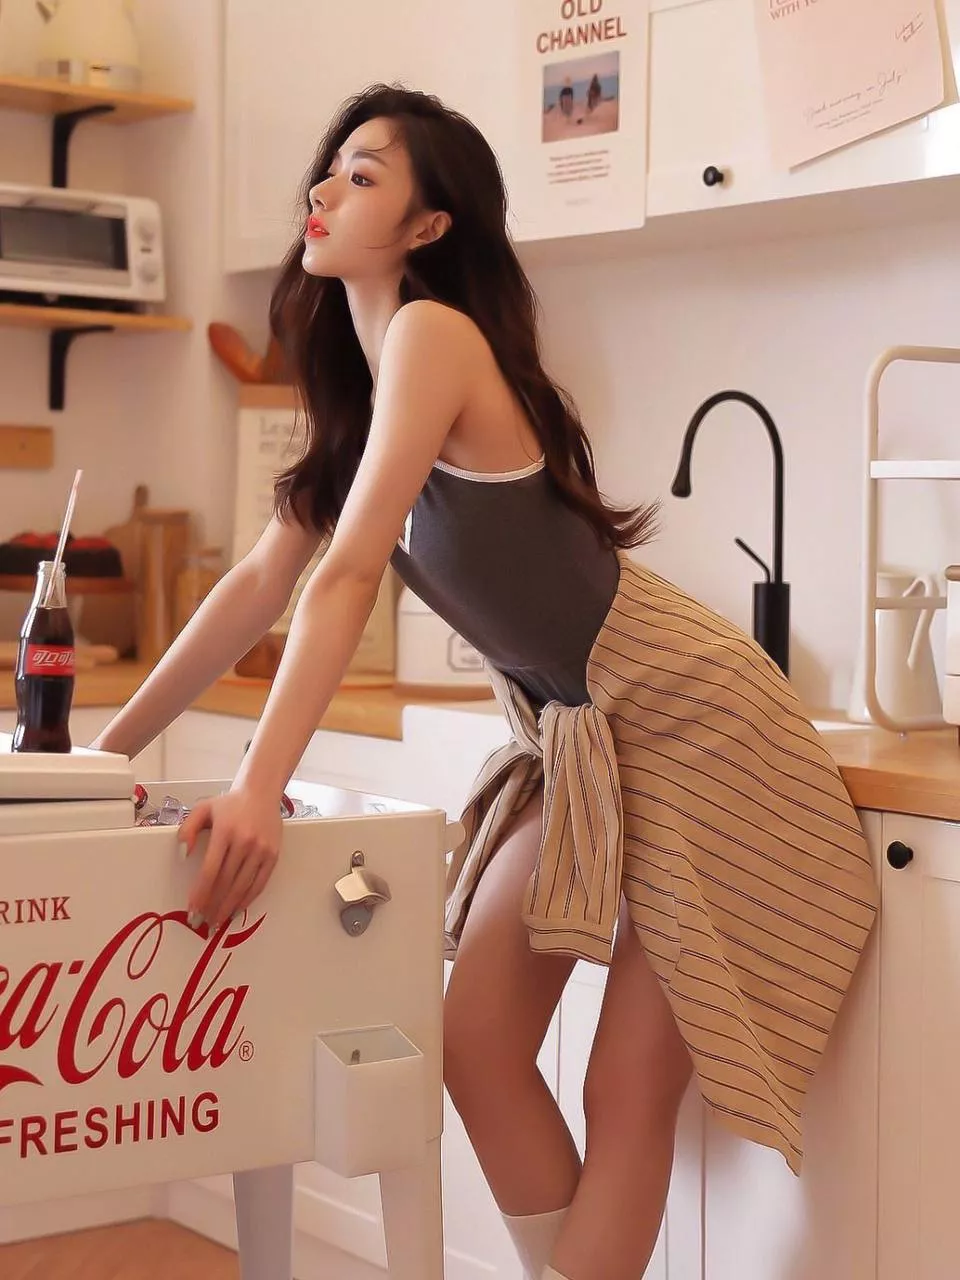 Coca-Cola beautiful woman